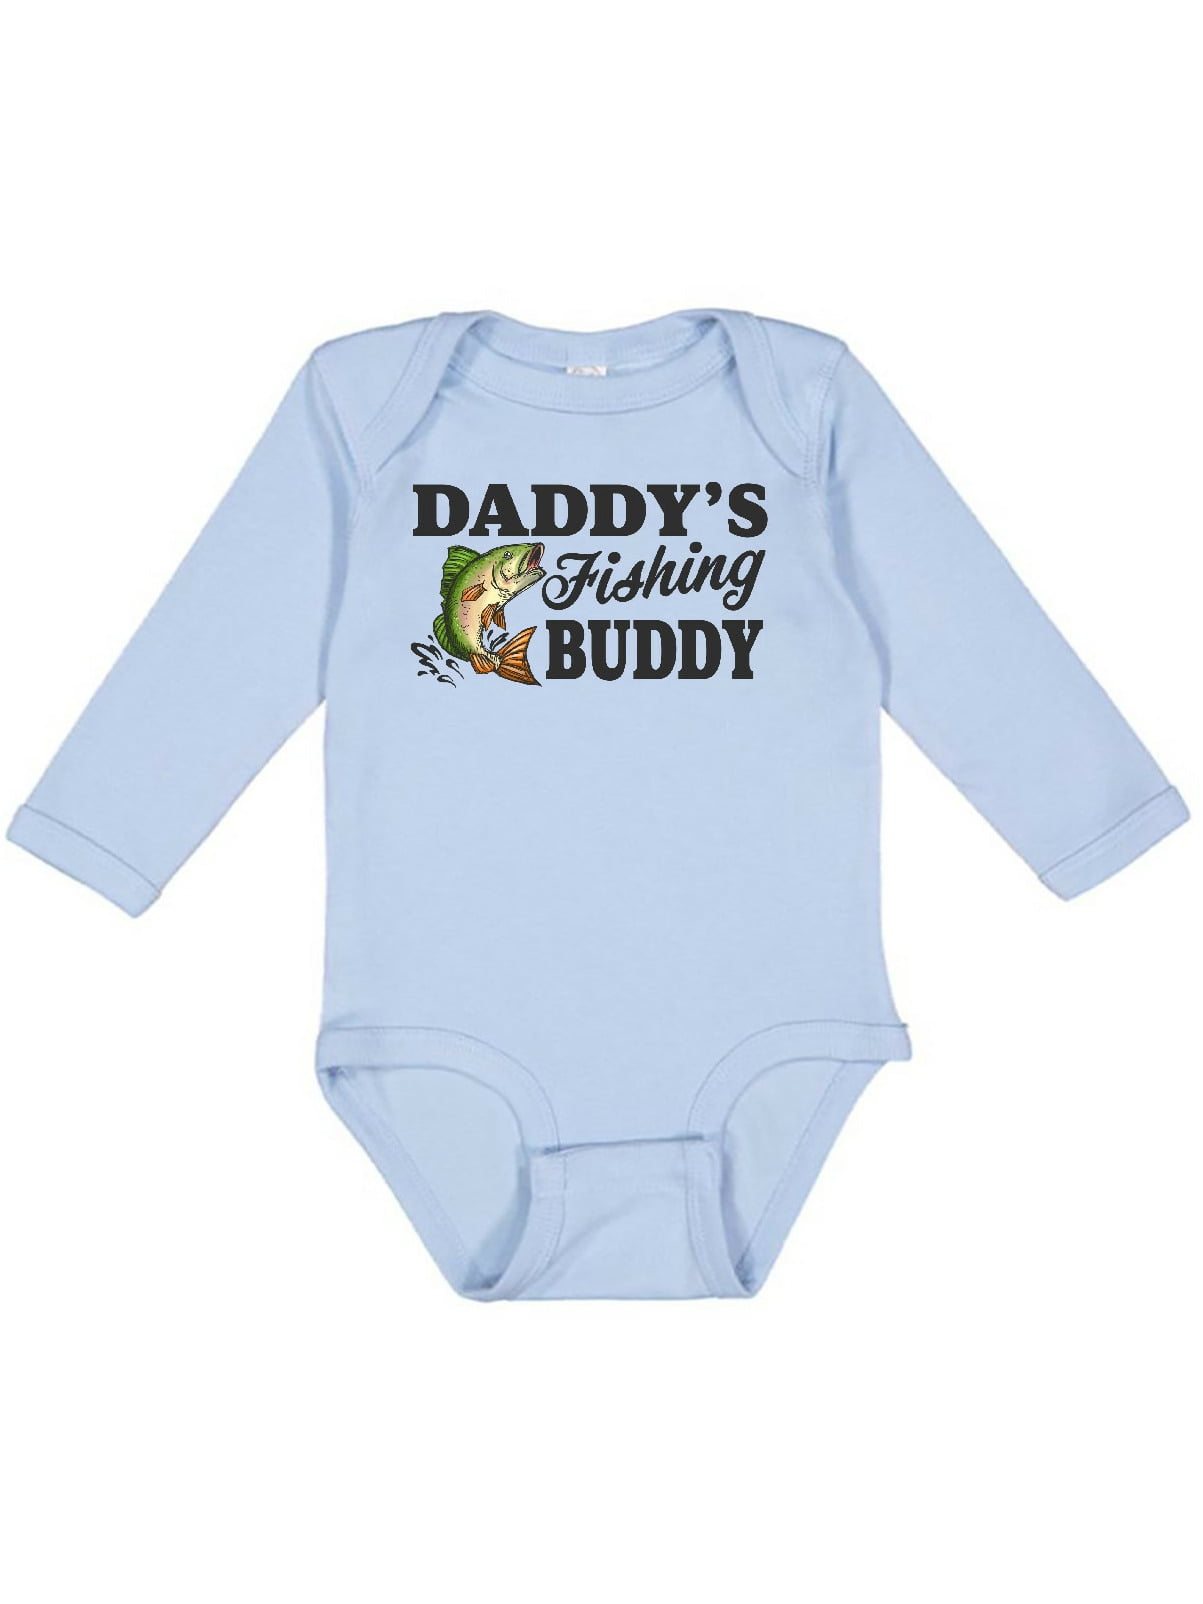 Inktastic Daddy's Fishing Buddy Boys Long Sleeve Baby Bodysuit